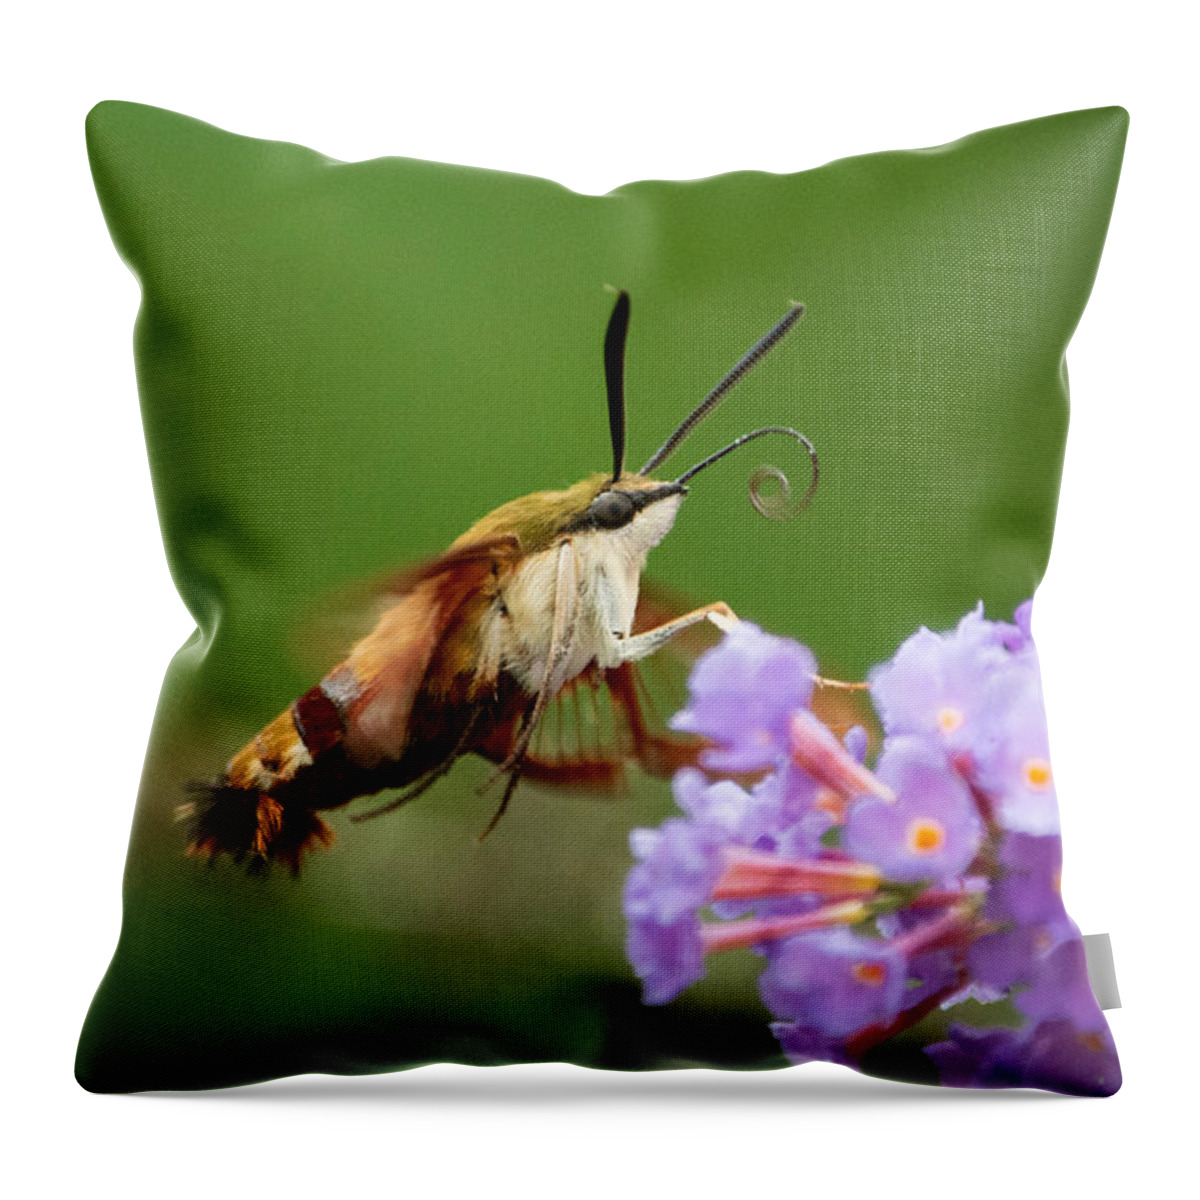 Cool Throw Pillow featuring the photograph The Hummingbird Moth by Linda Bonaccorsi